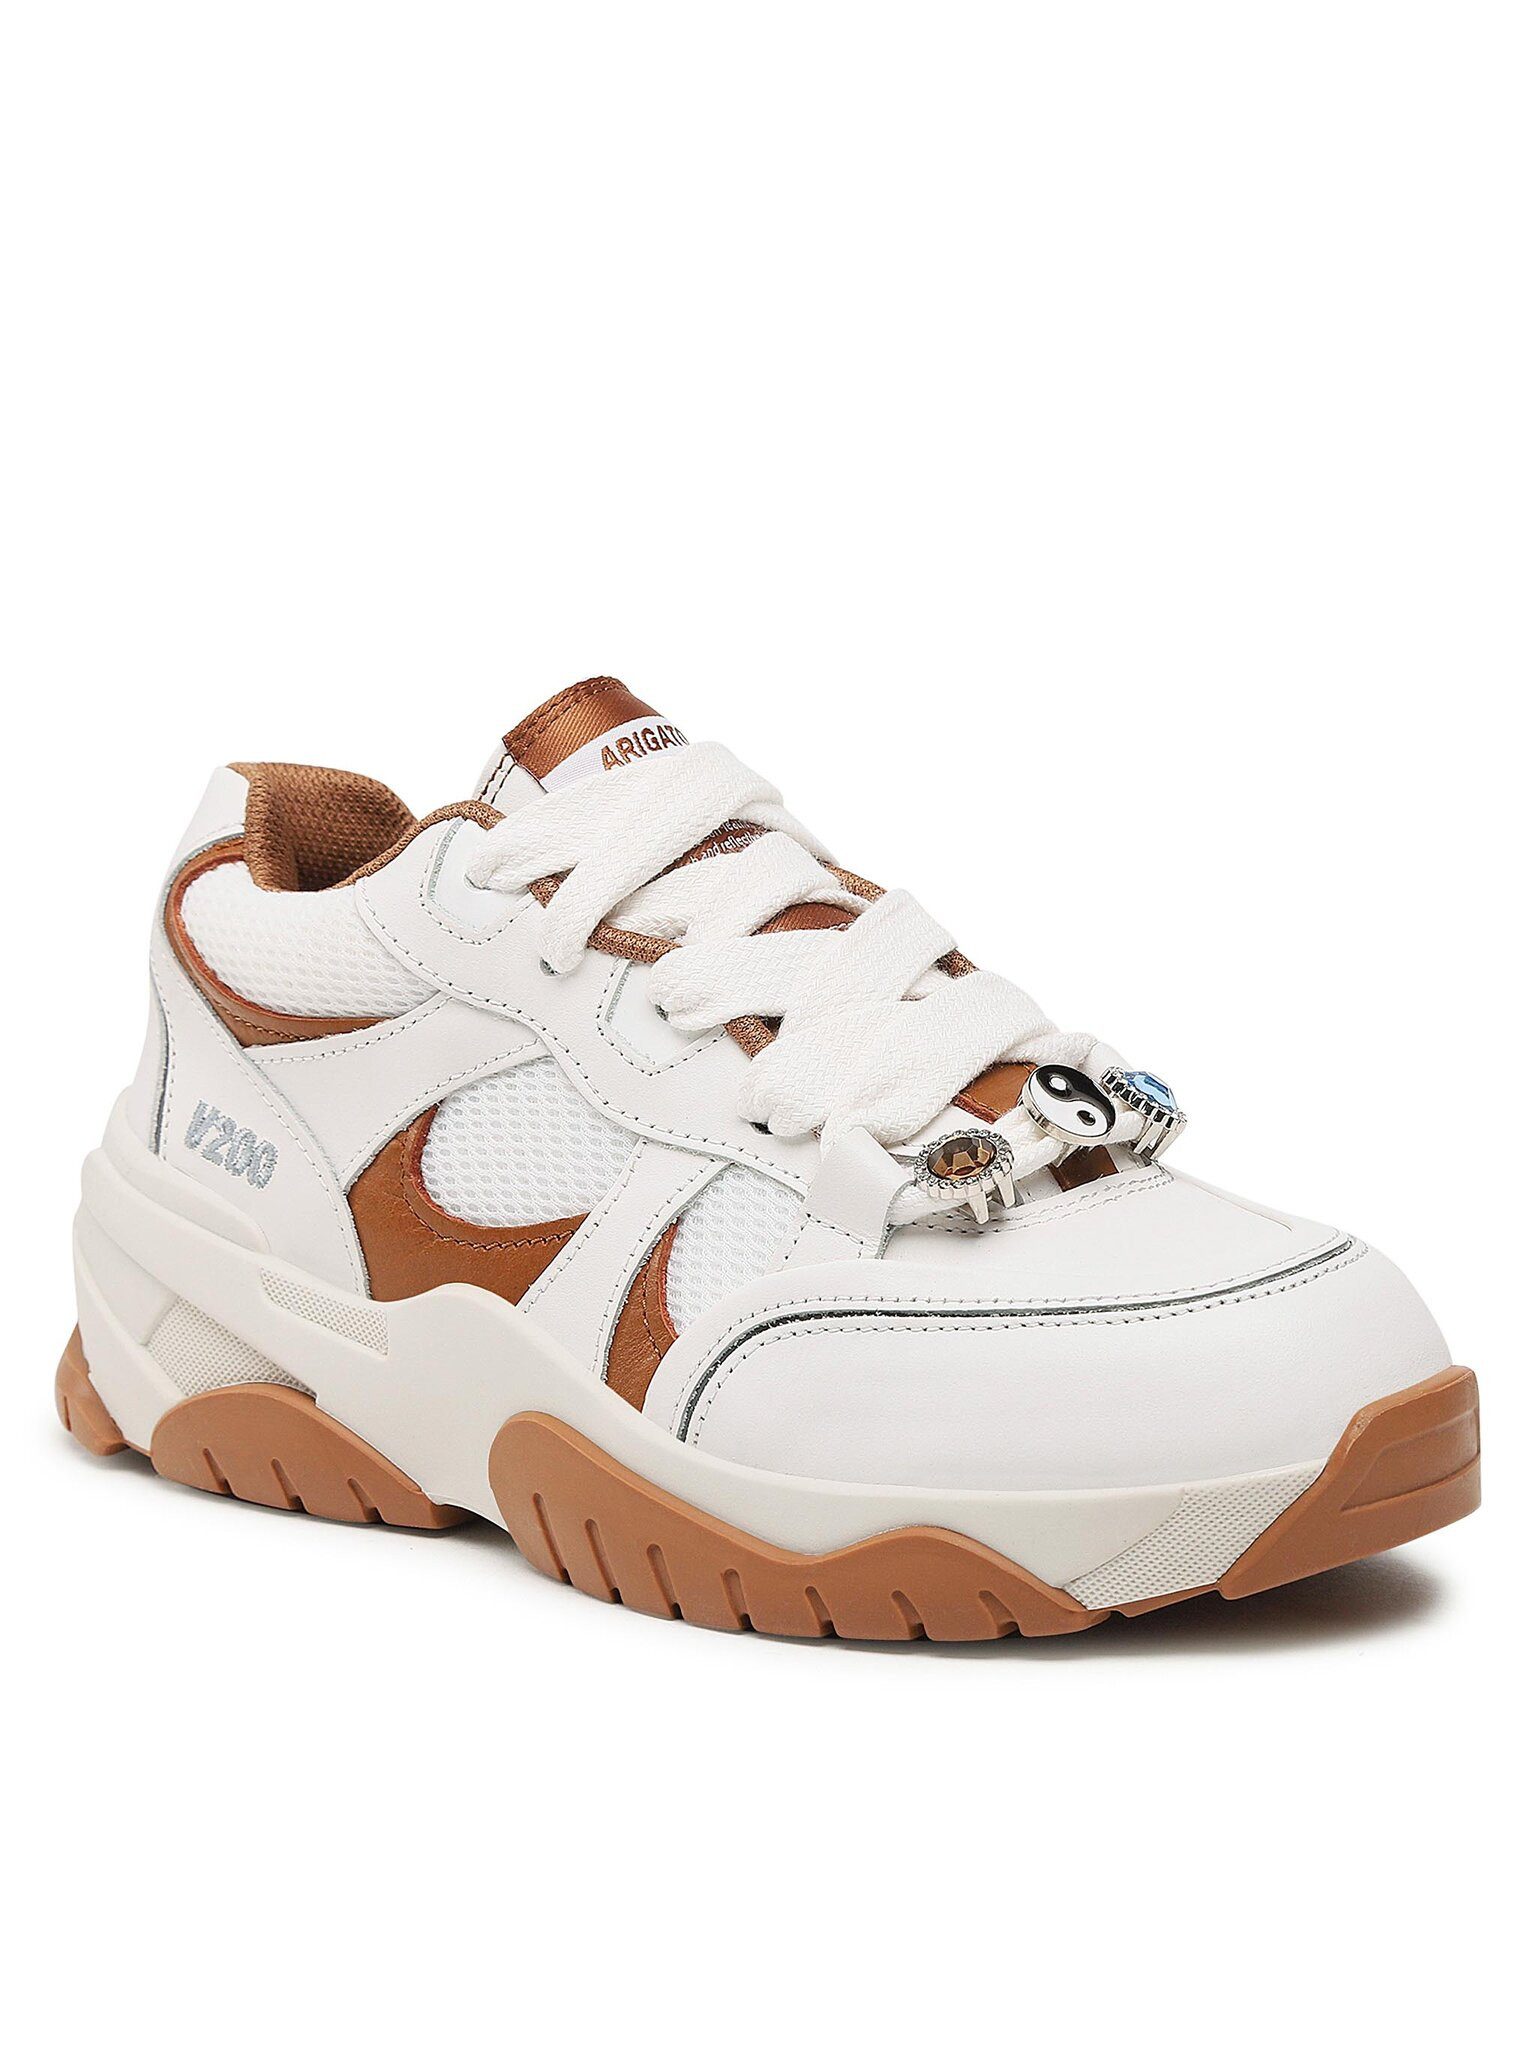 Axel Arigato Sneakers Catfish Lo F0051016 White/Camel Sneaker